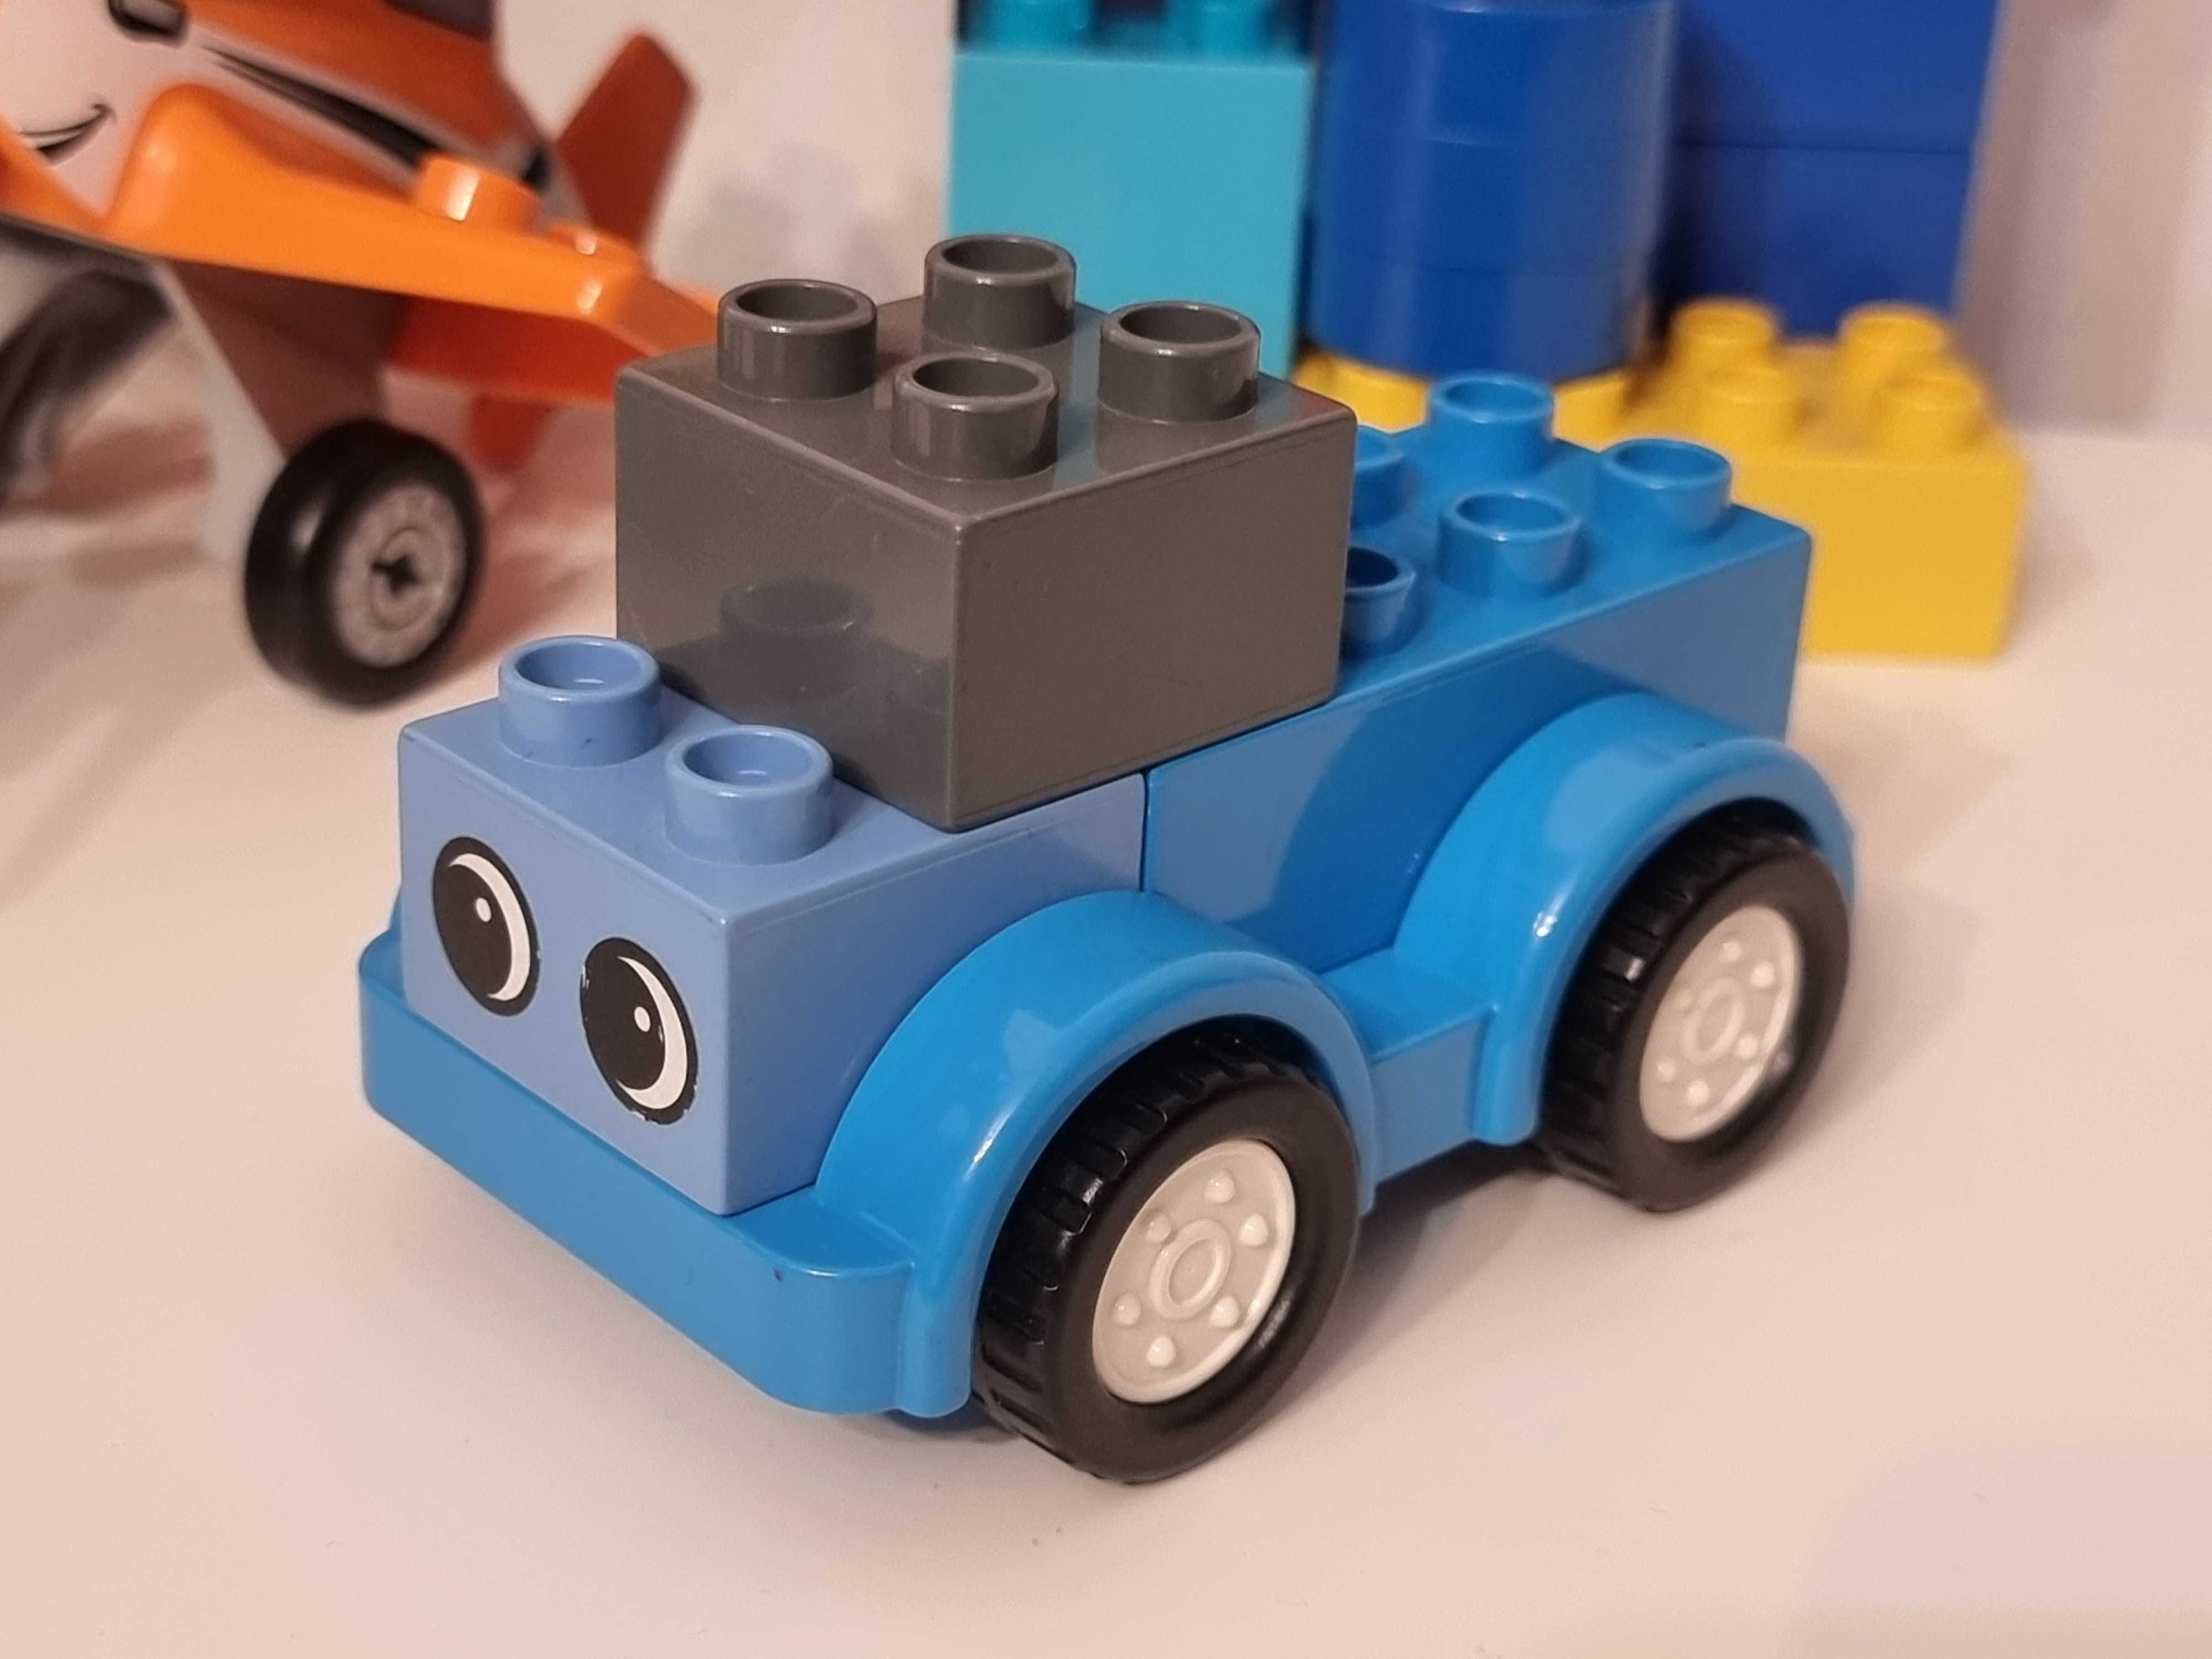 Scoala de pilotaj Lego Duplo, Avioane